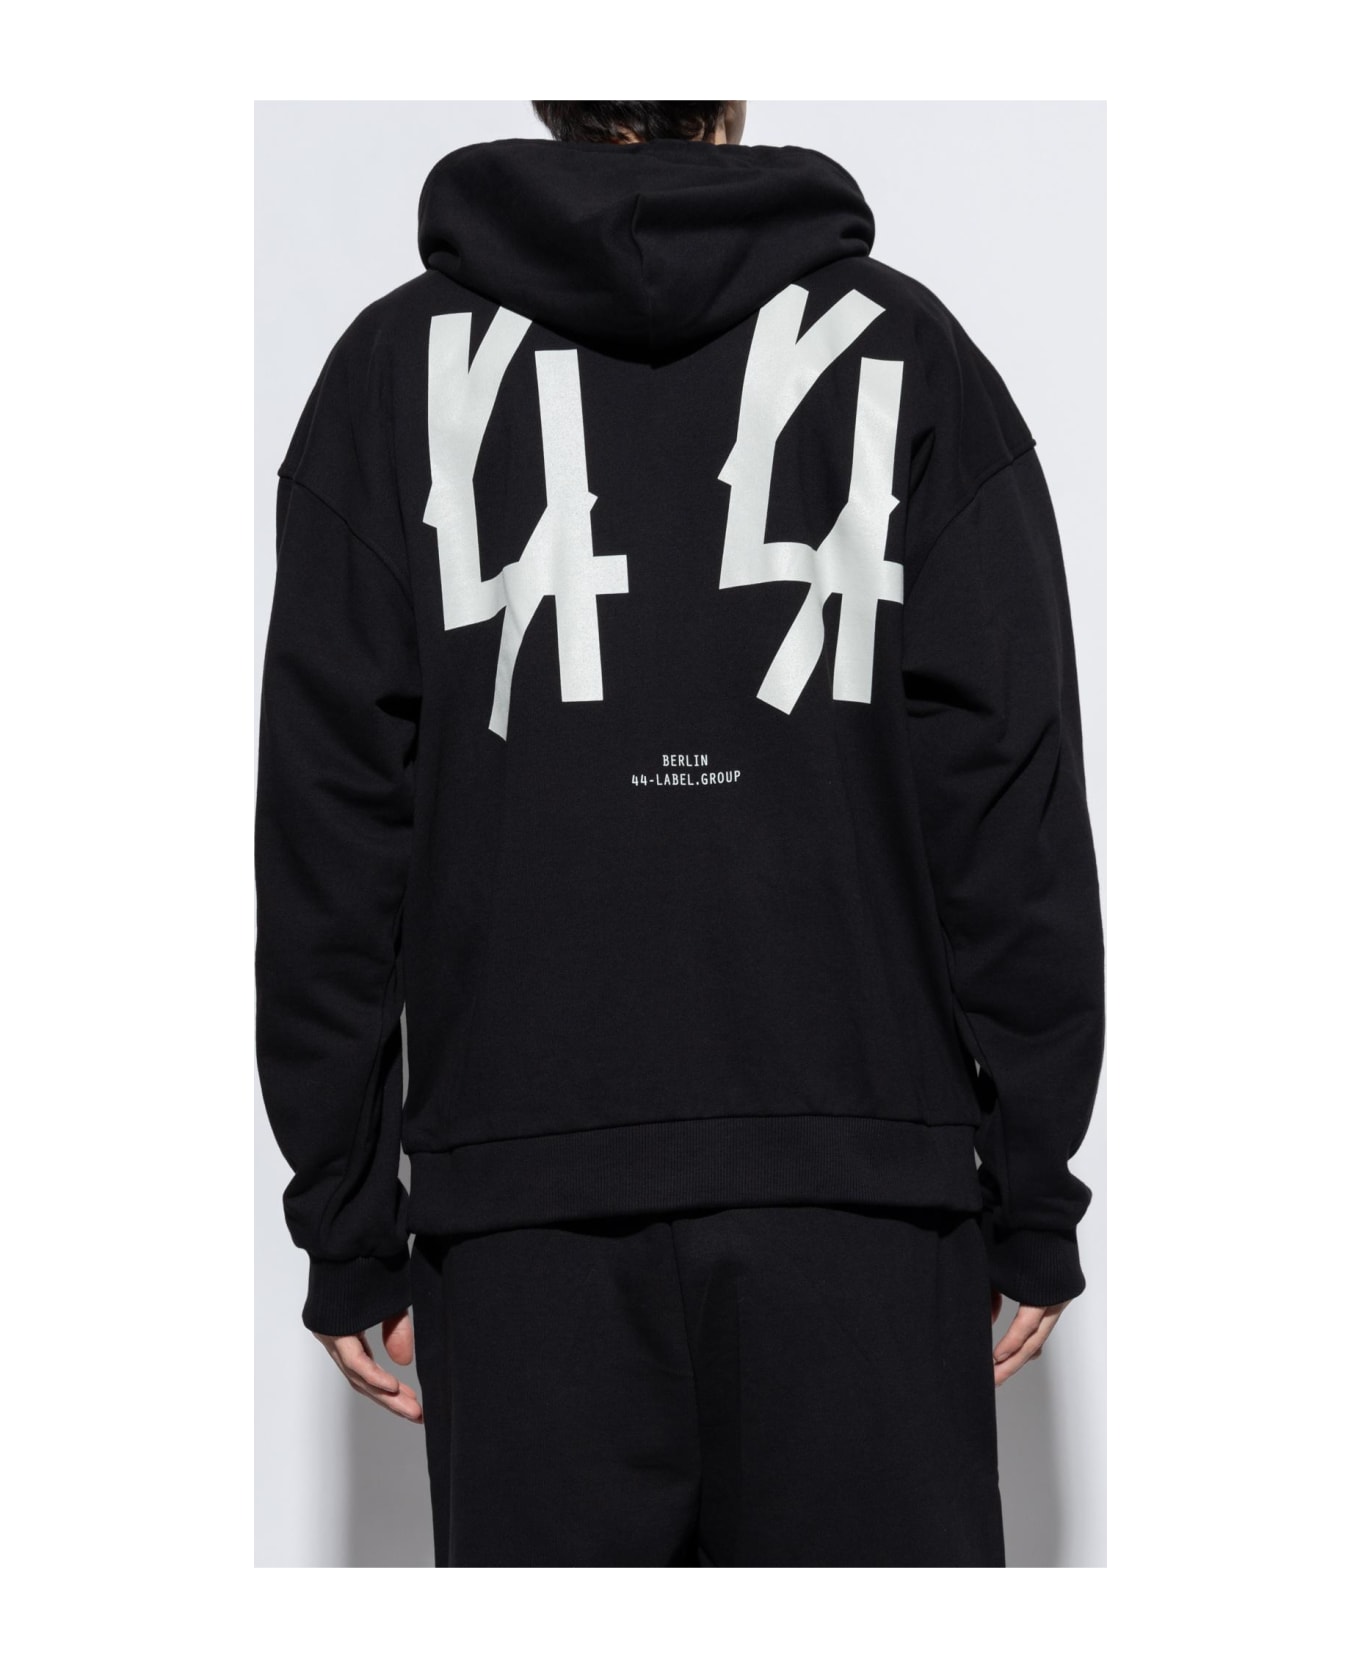 44 Label Group Hoodie With Logo Fleece - BLACK